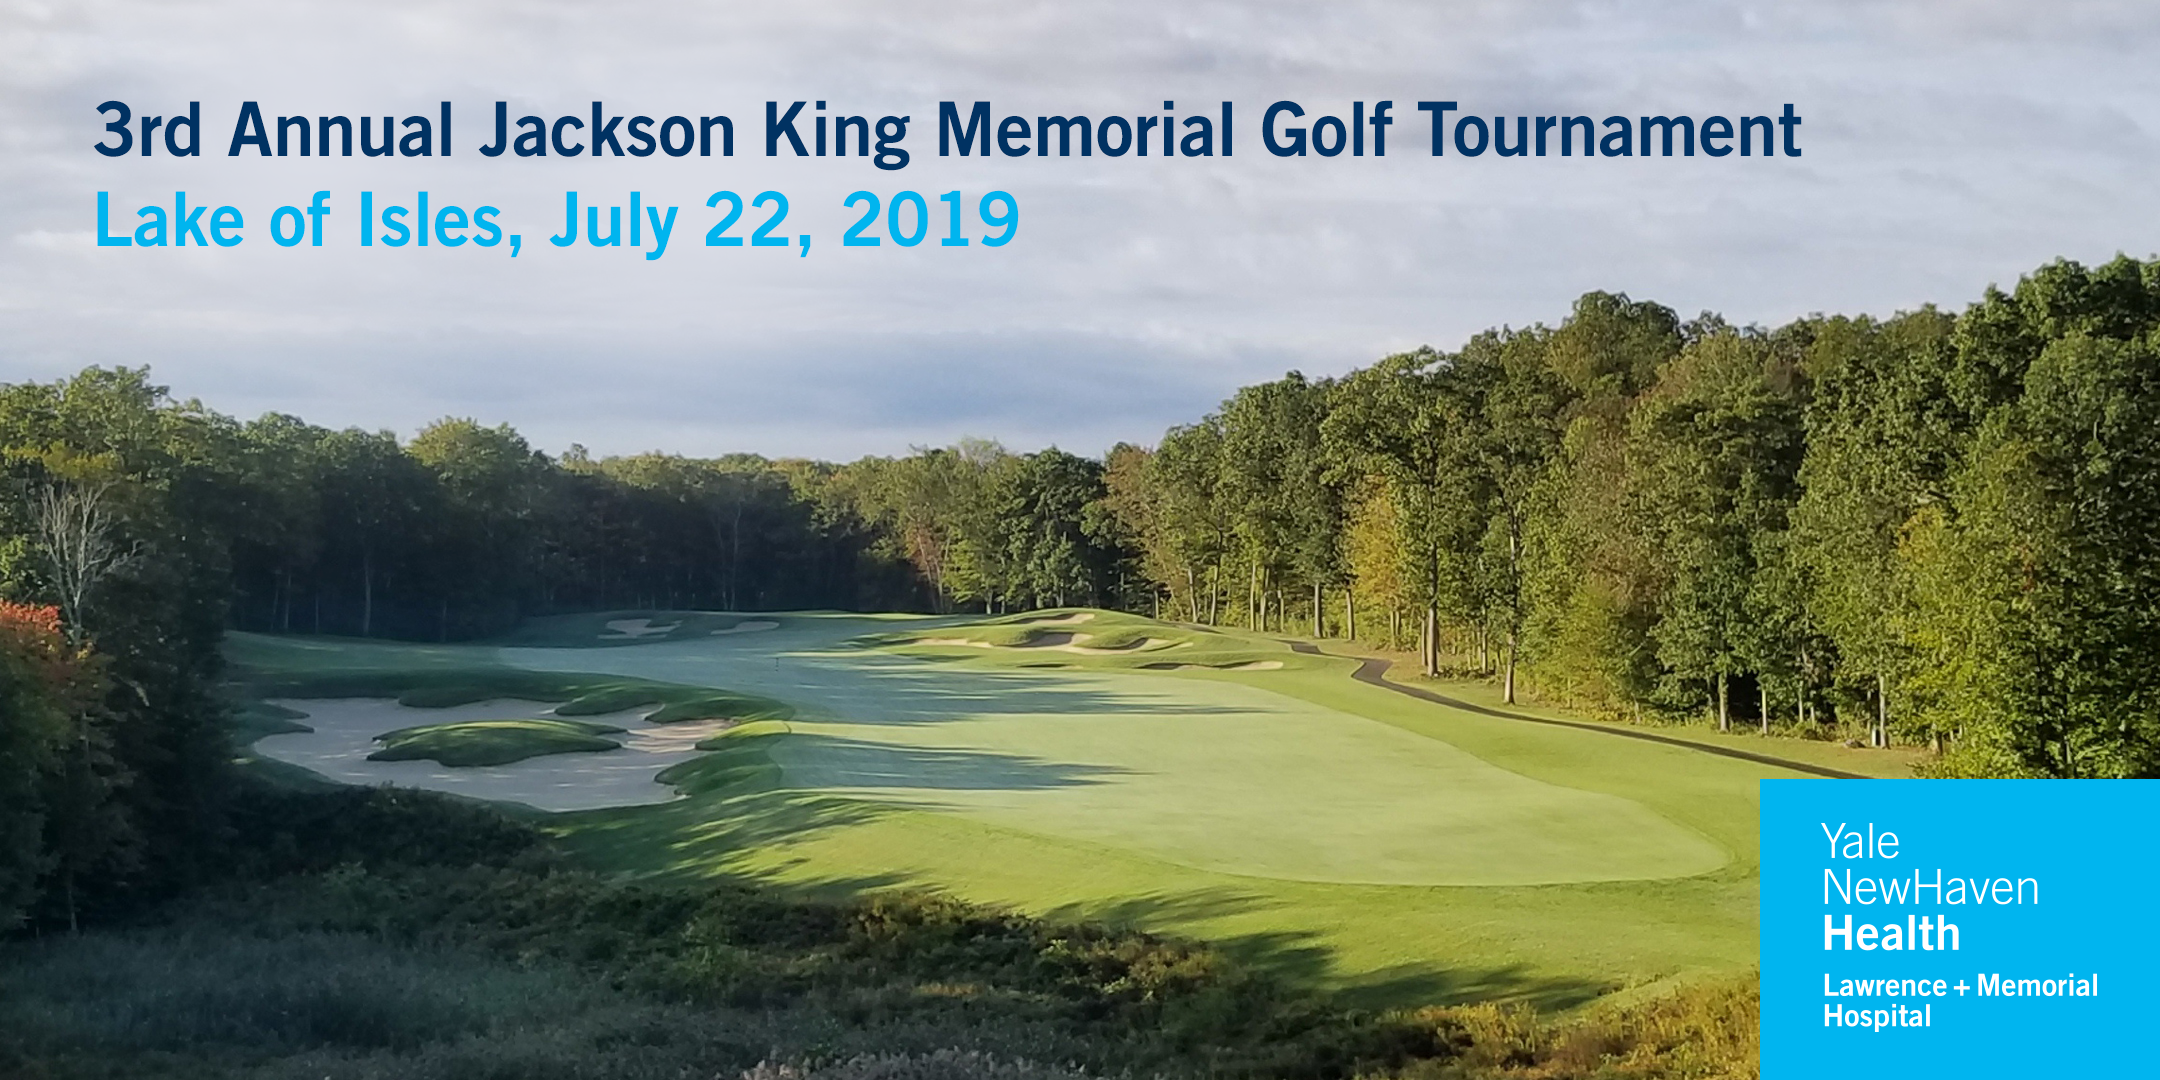 L+M Hospital 3rd Annual Jackson King Memorial Golf Tournament